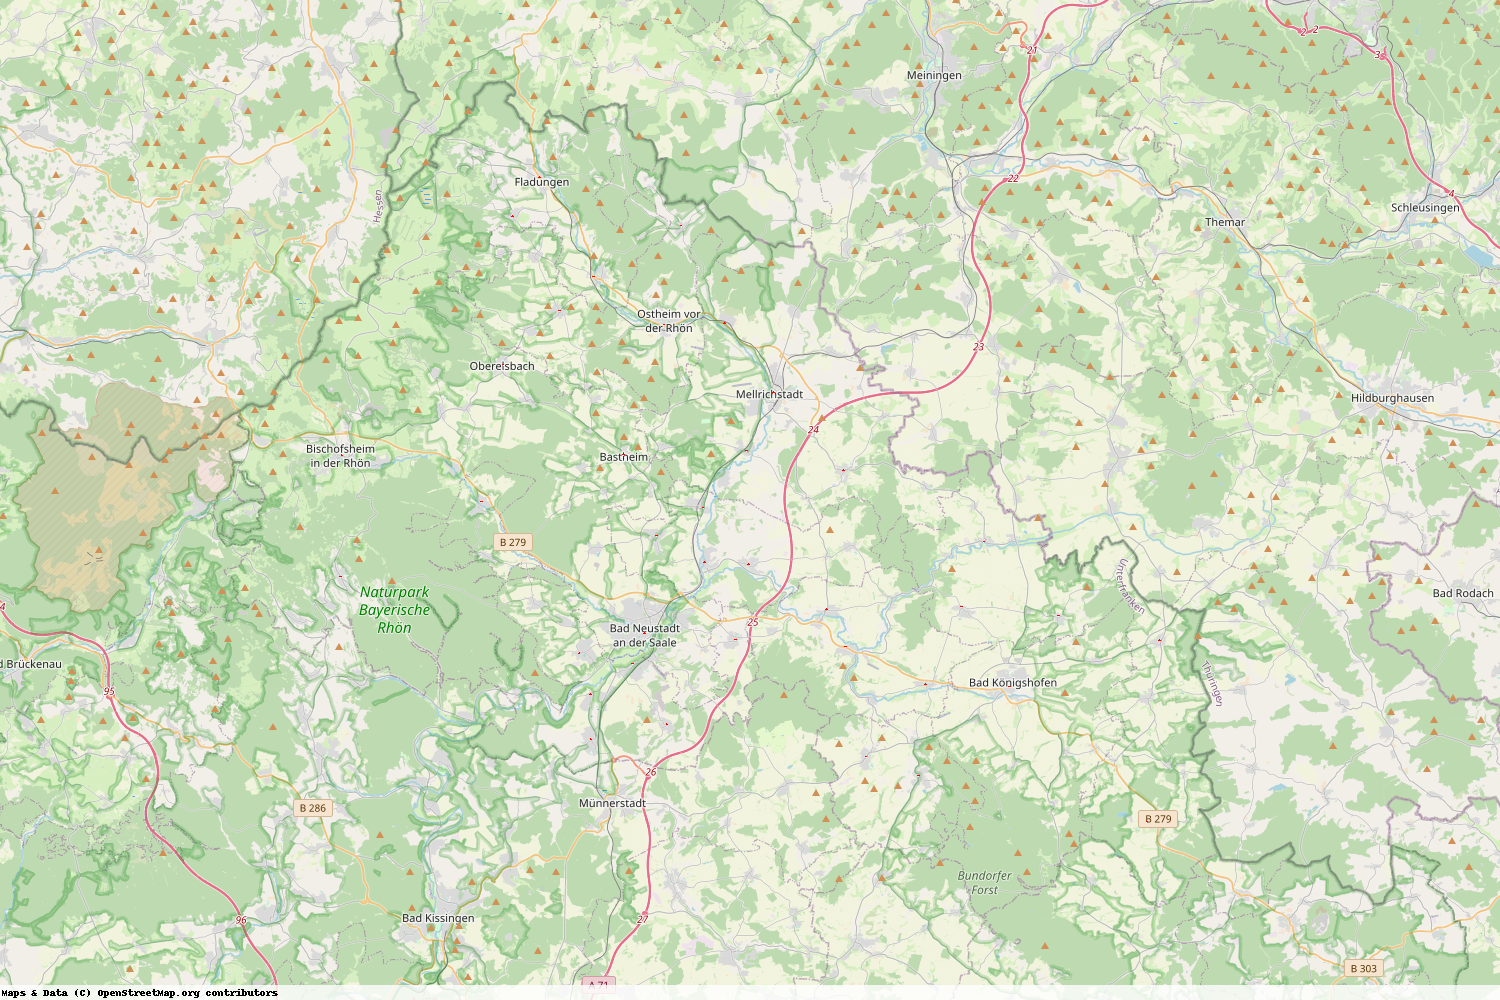 Ist gerade Stromausfall in Bayern - Rhön-Grabfeld?